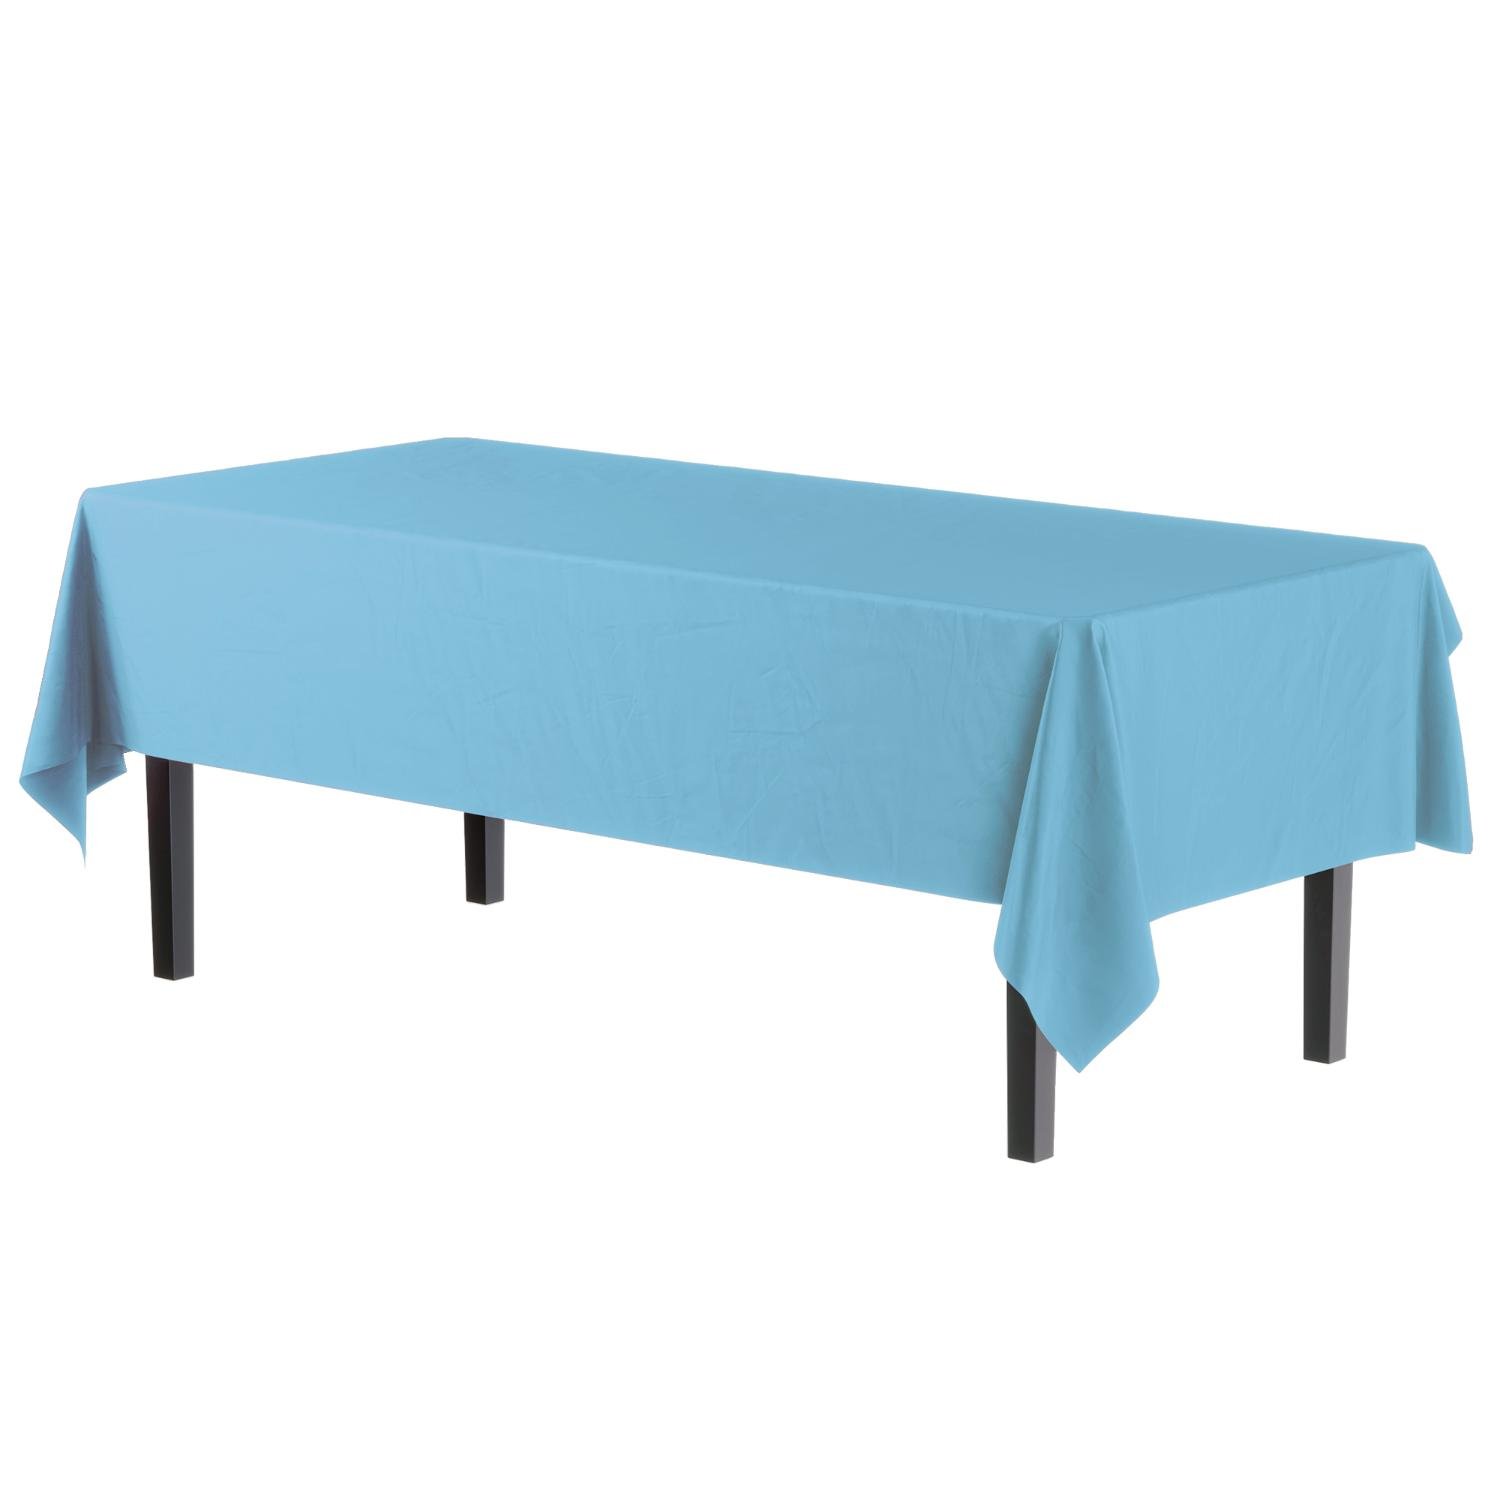 Premium Sky Blue Table Cover - 96 Ct.